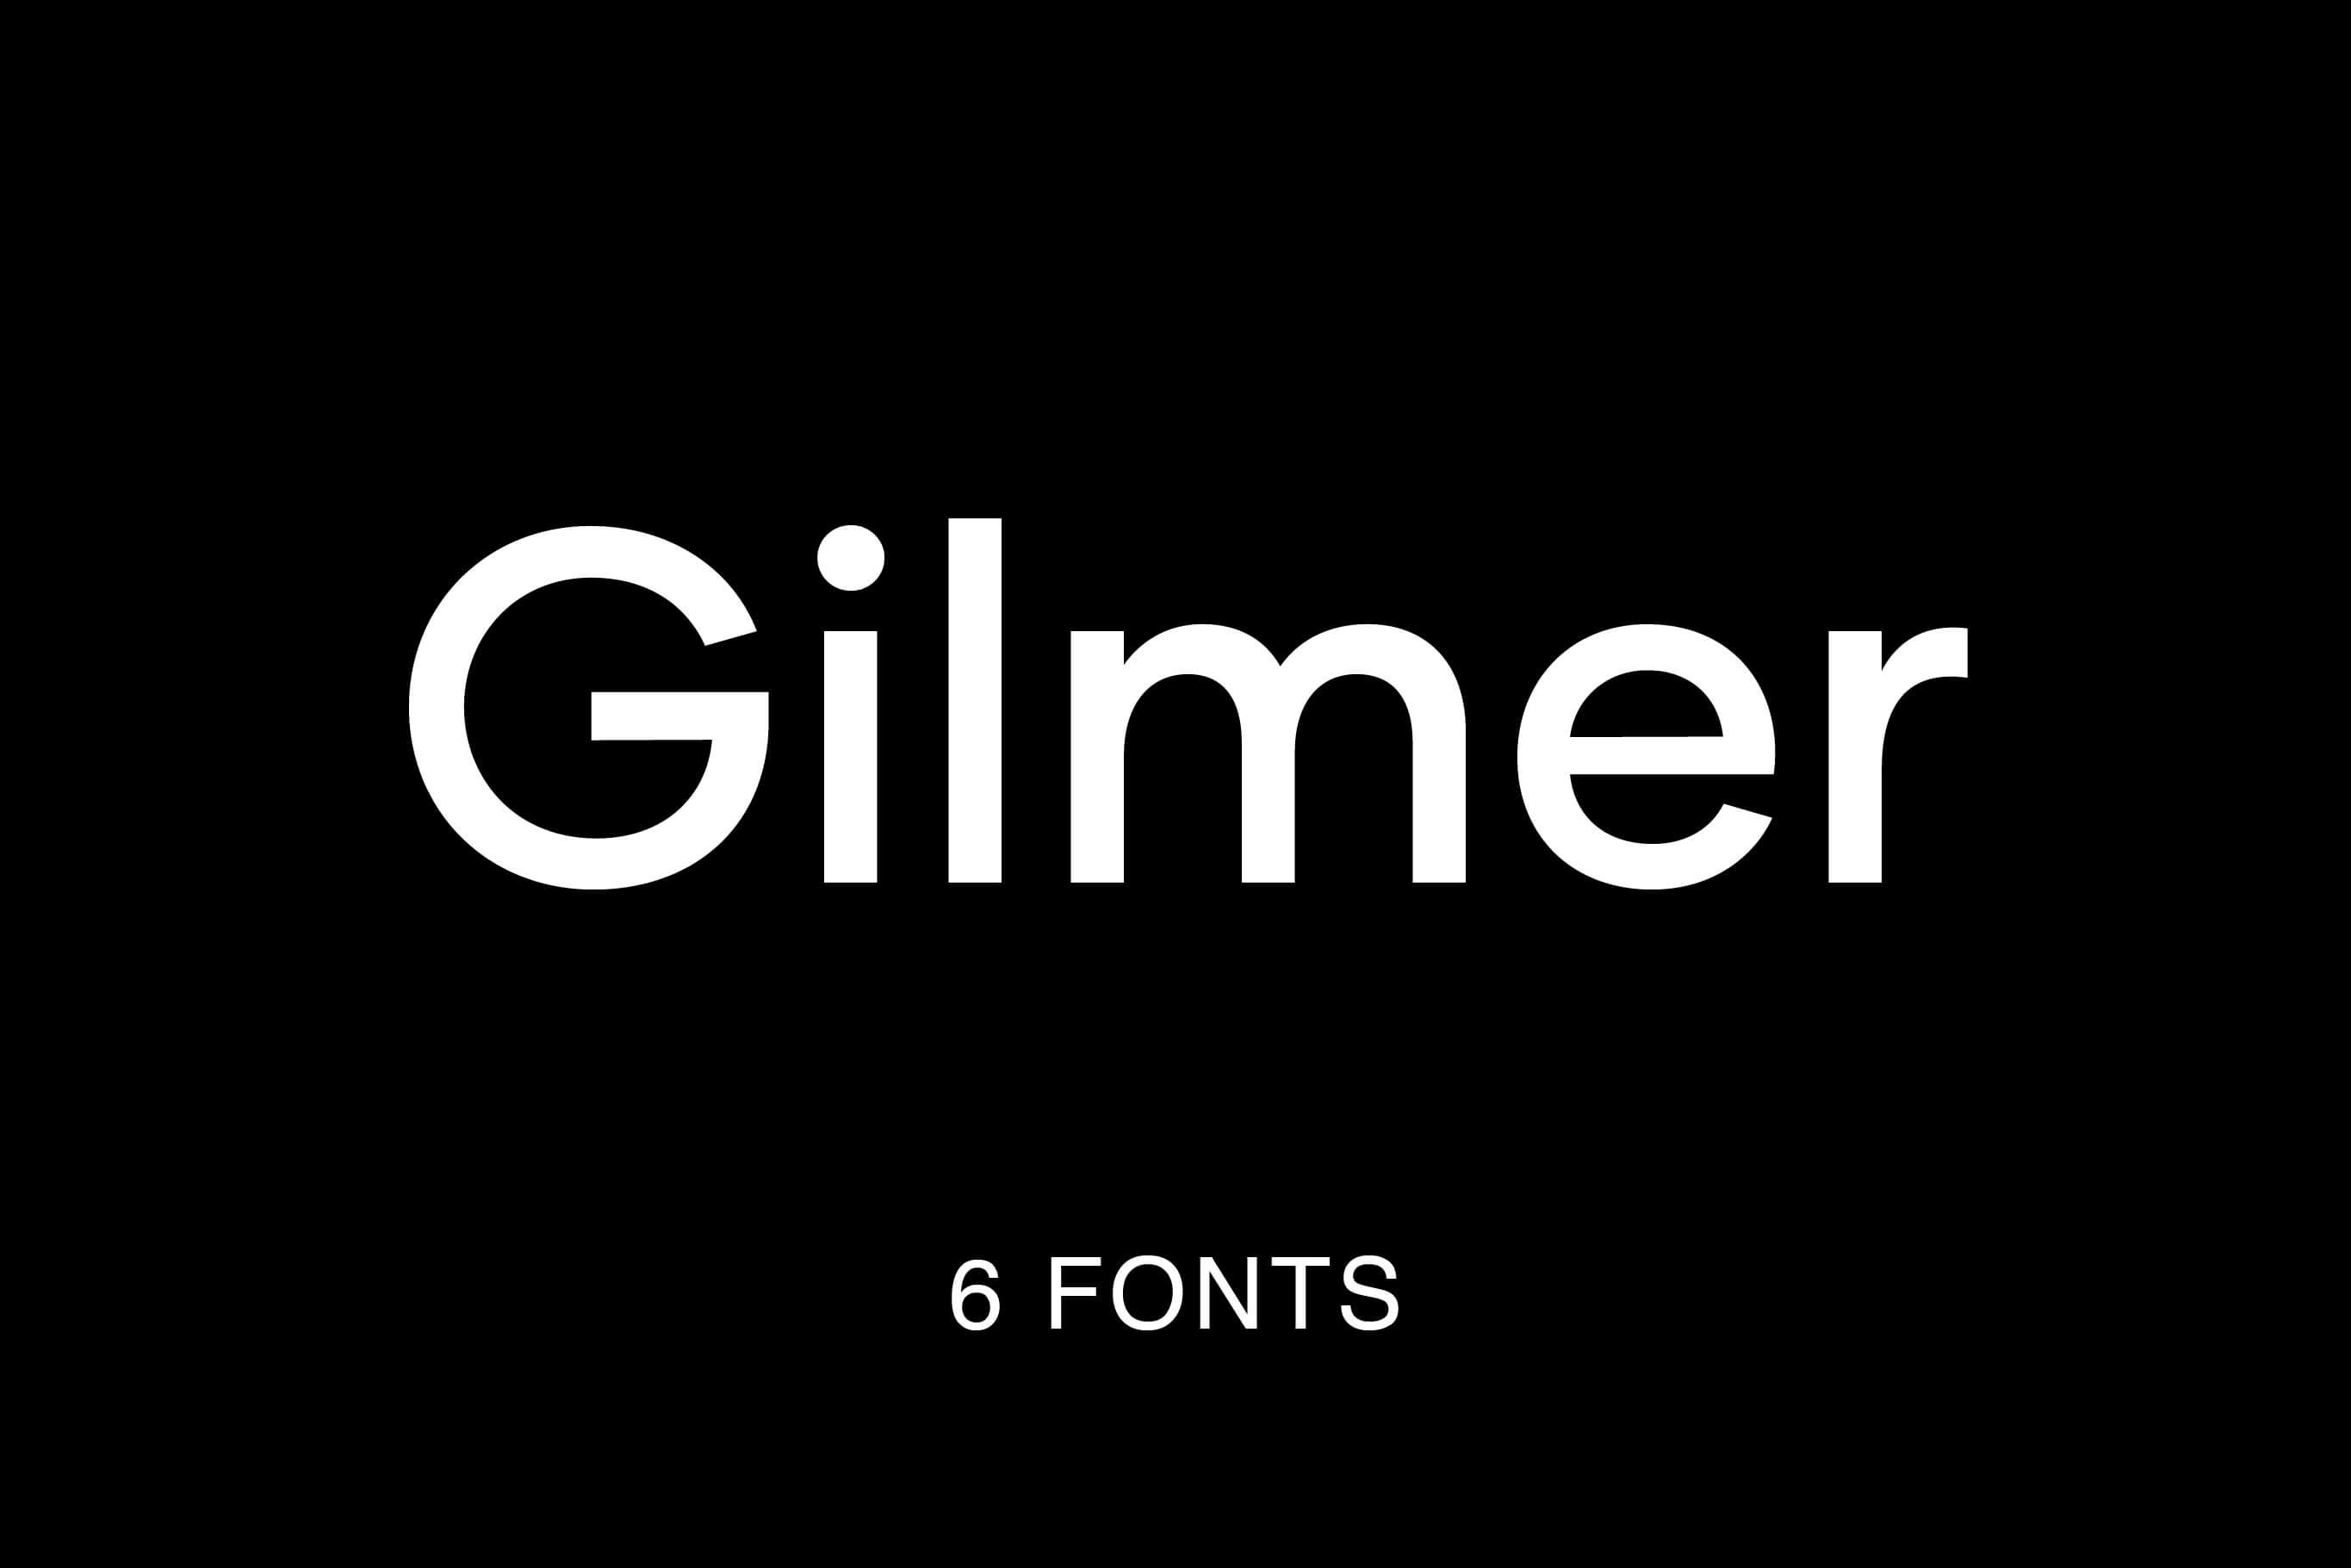 Gilmer – Geometric Sans Serif cover image.